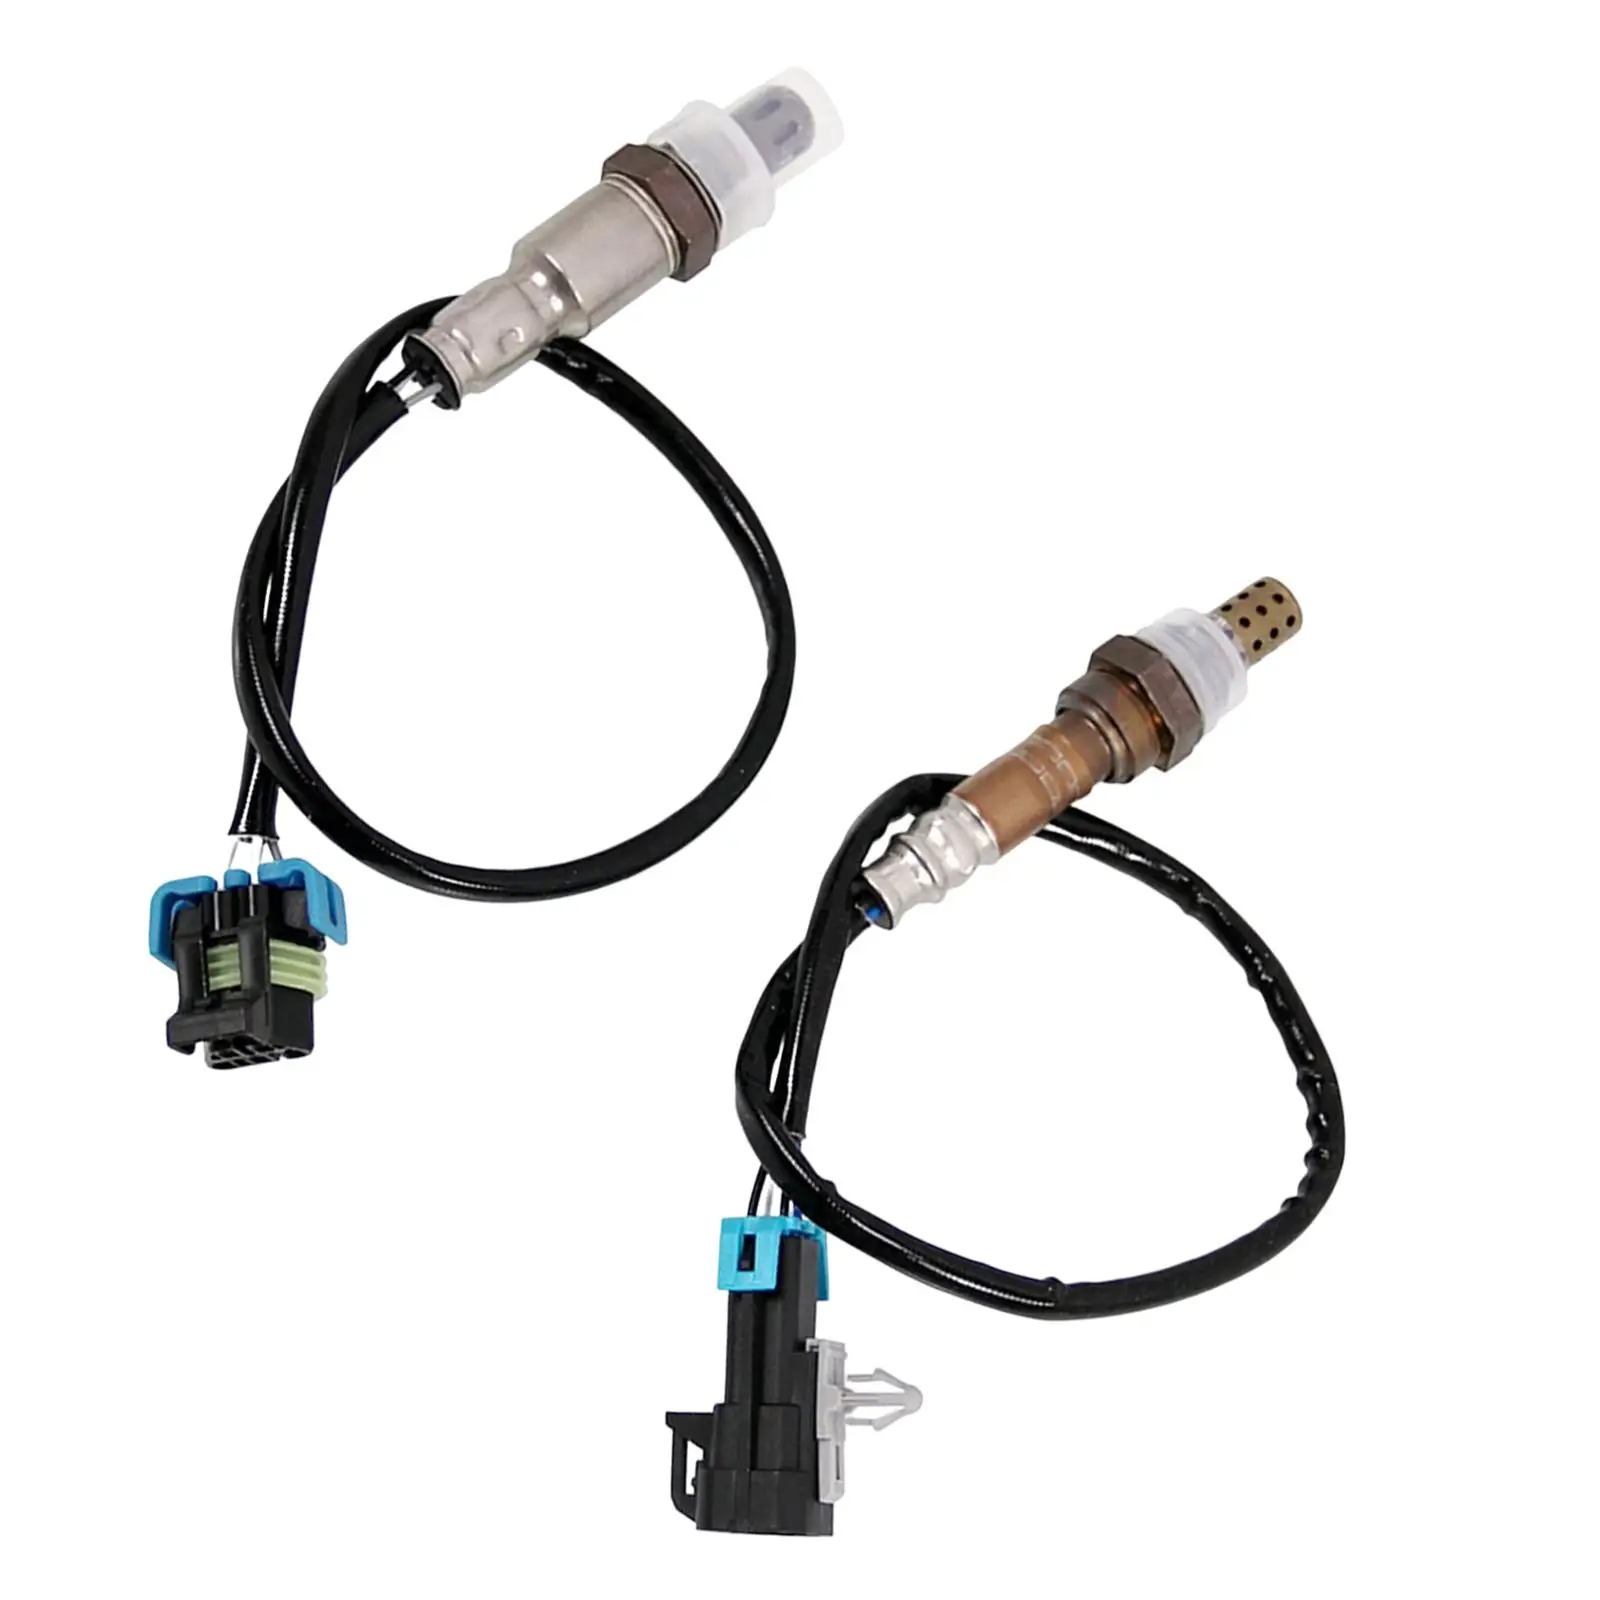  Sensors Upstream Downstream Oxygen Sensors Air Fuel Ratio Sensor for GMC 234-4242 234-4530 15128 21558 250-24708